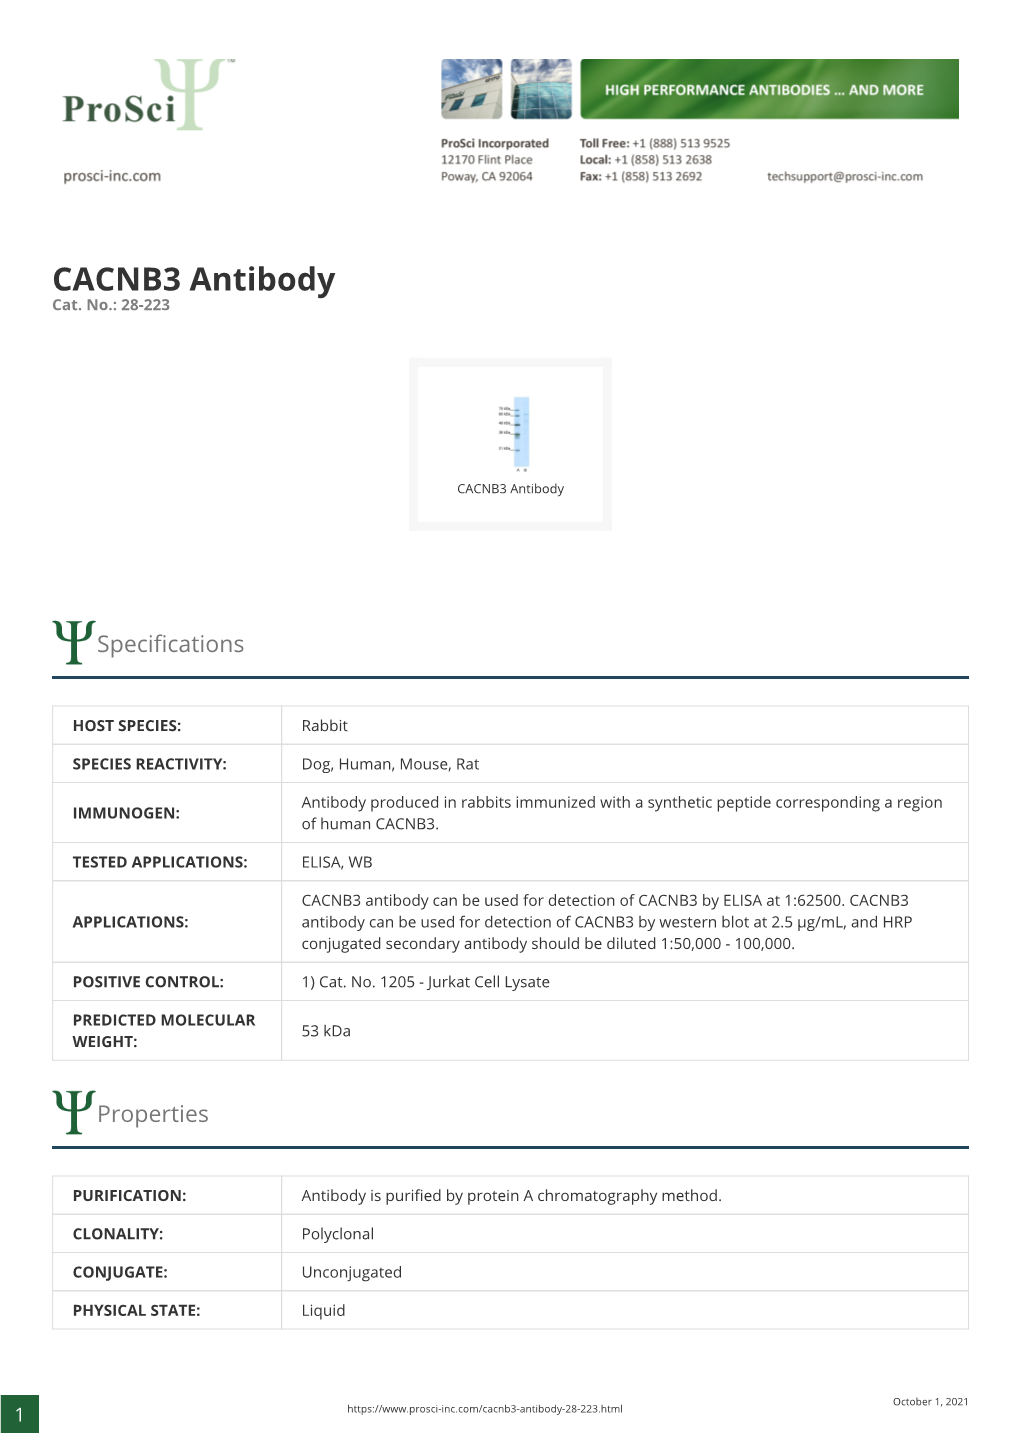 CACNB3 Antibody Cat